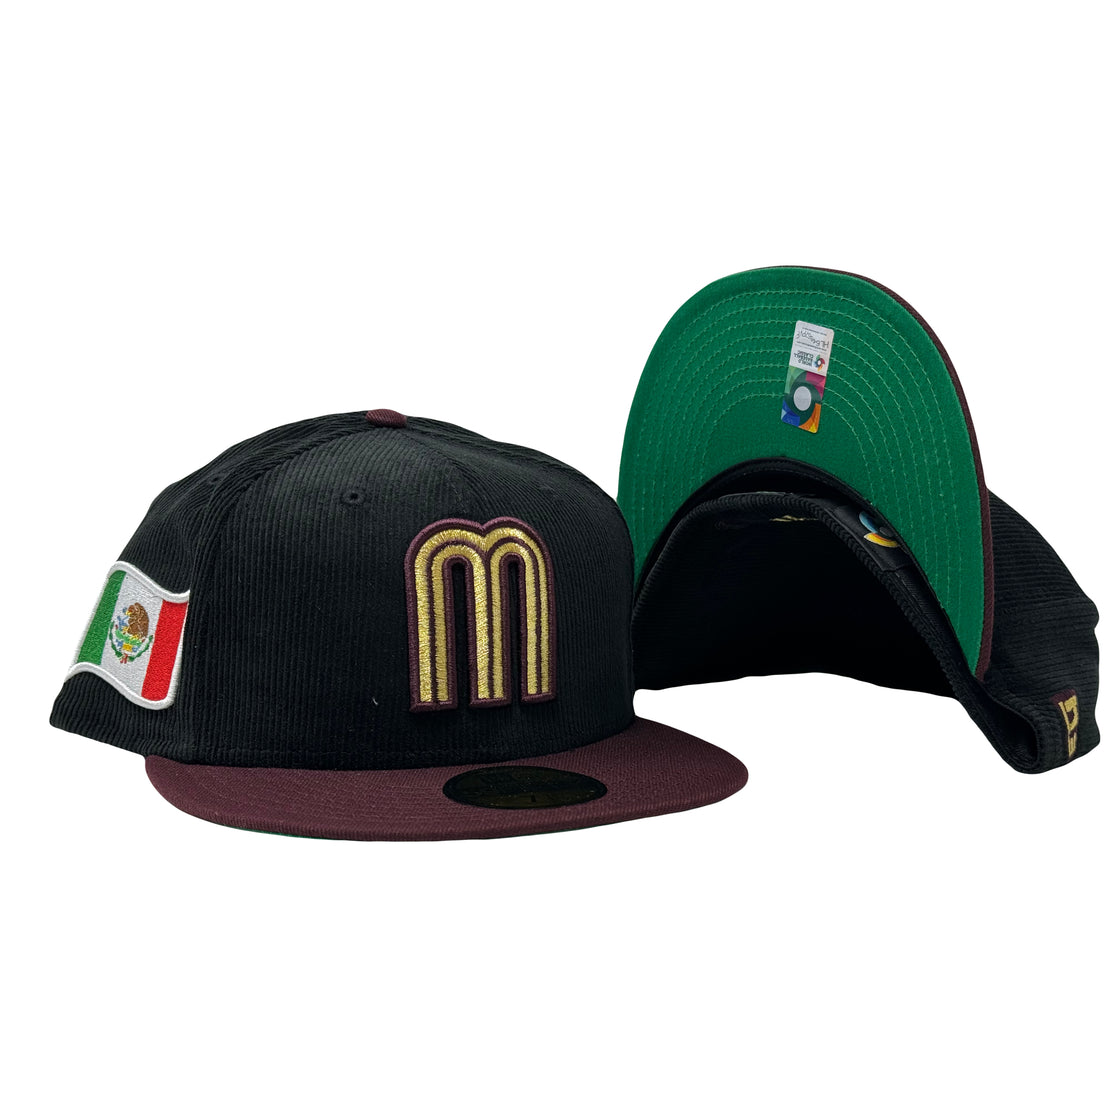 Mexico World Baseball Classic Black Corduroy Crown Maroon visor Green Brim New Era Fitted Hat